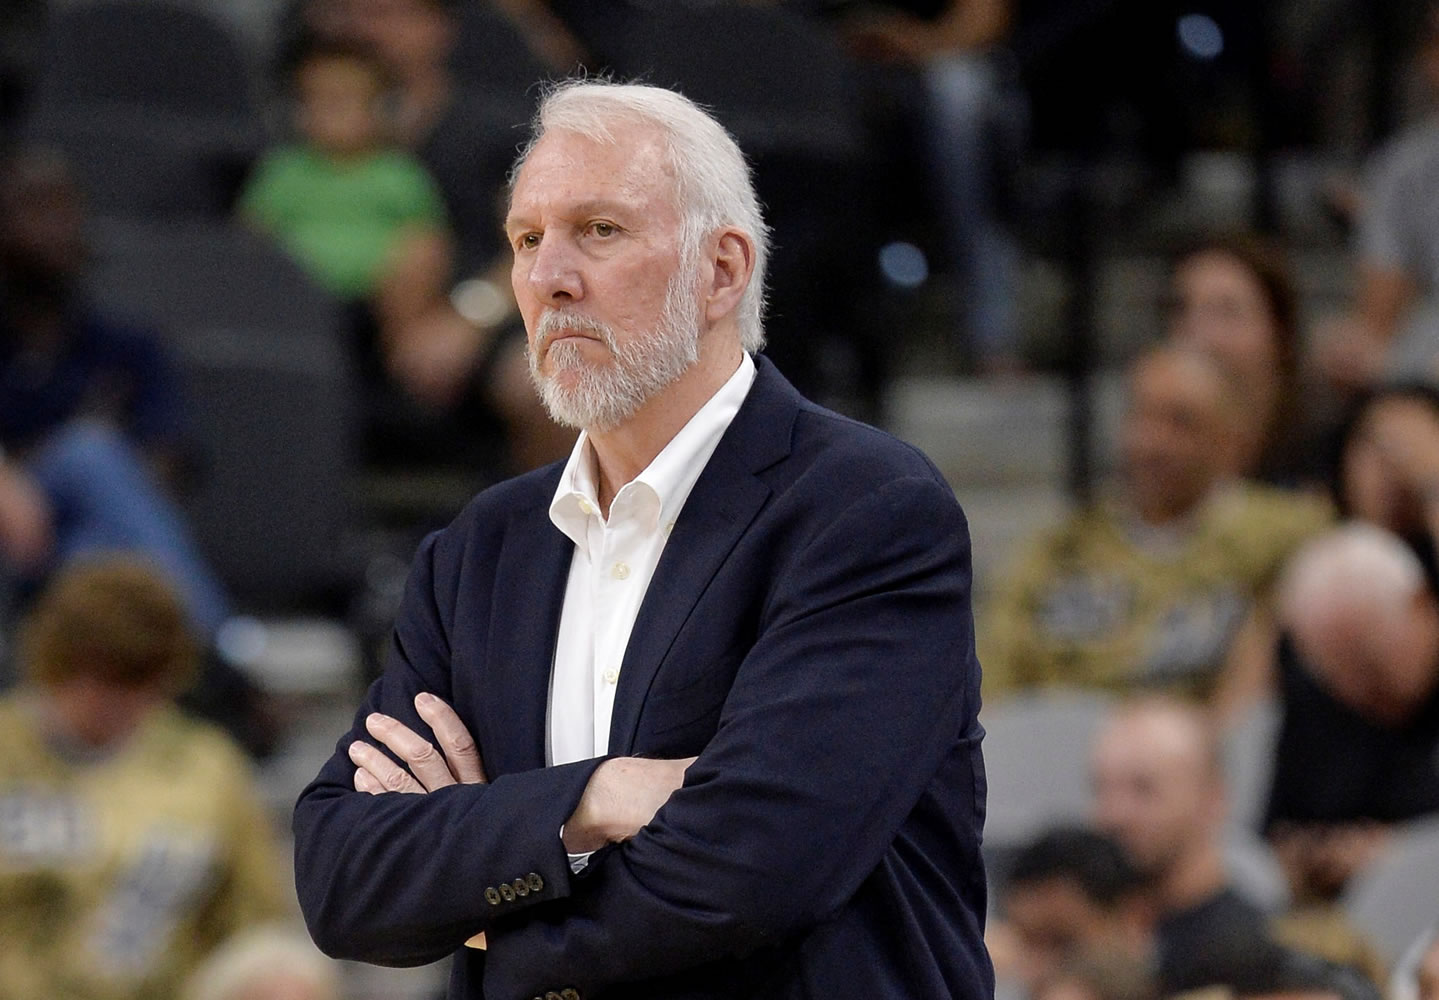 San Antonio Spurs head coach Gregg Popovich will replace Mike Krzyzewski as the U.S. basketball coach following the 2016 Olympics.